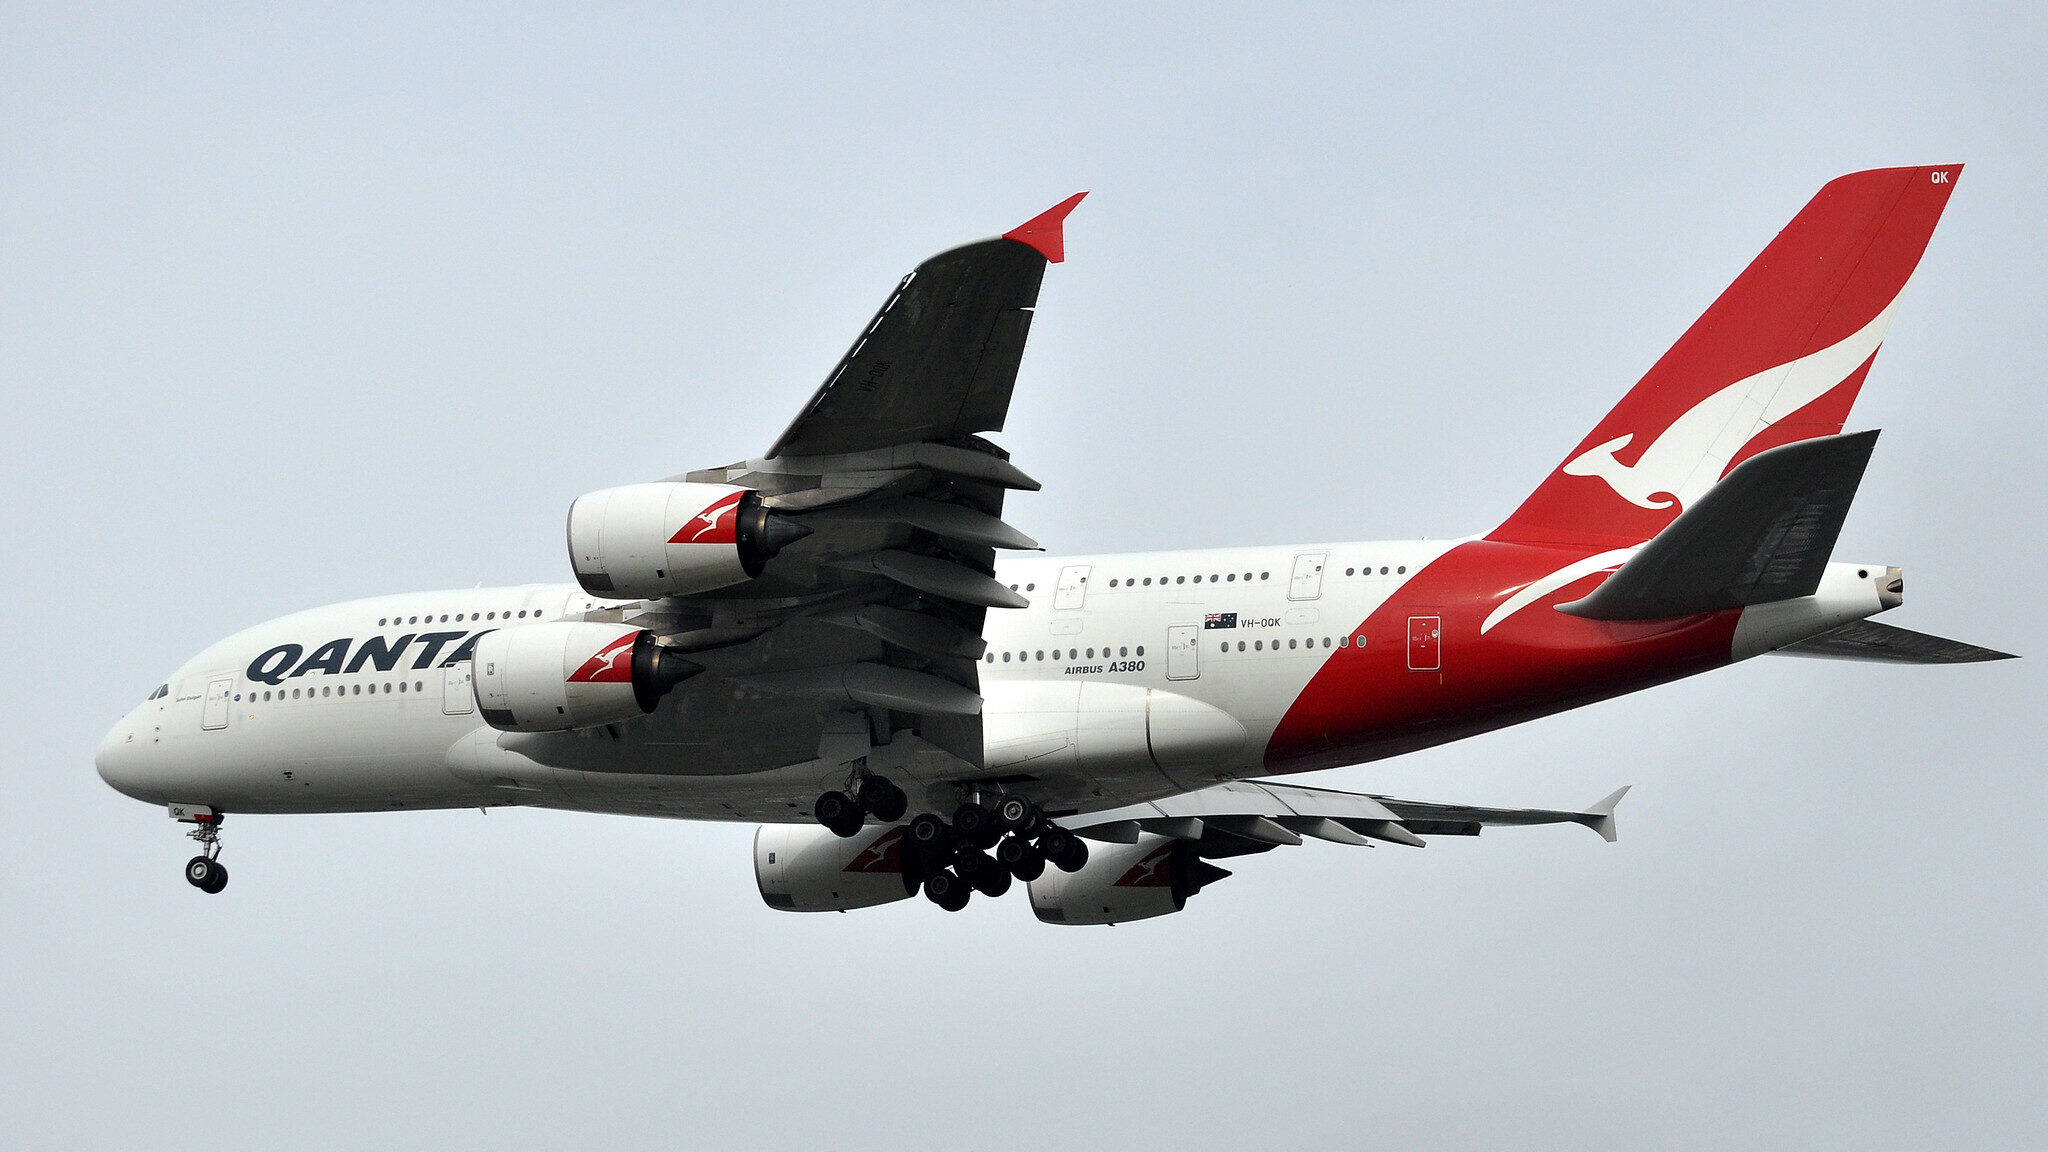 QANTAS launches flights to bring Australians home